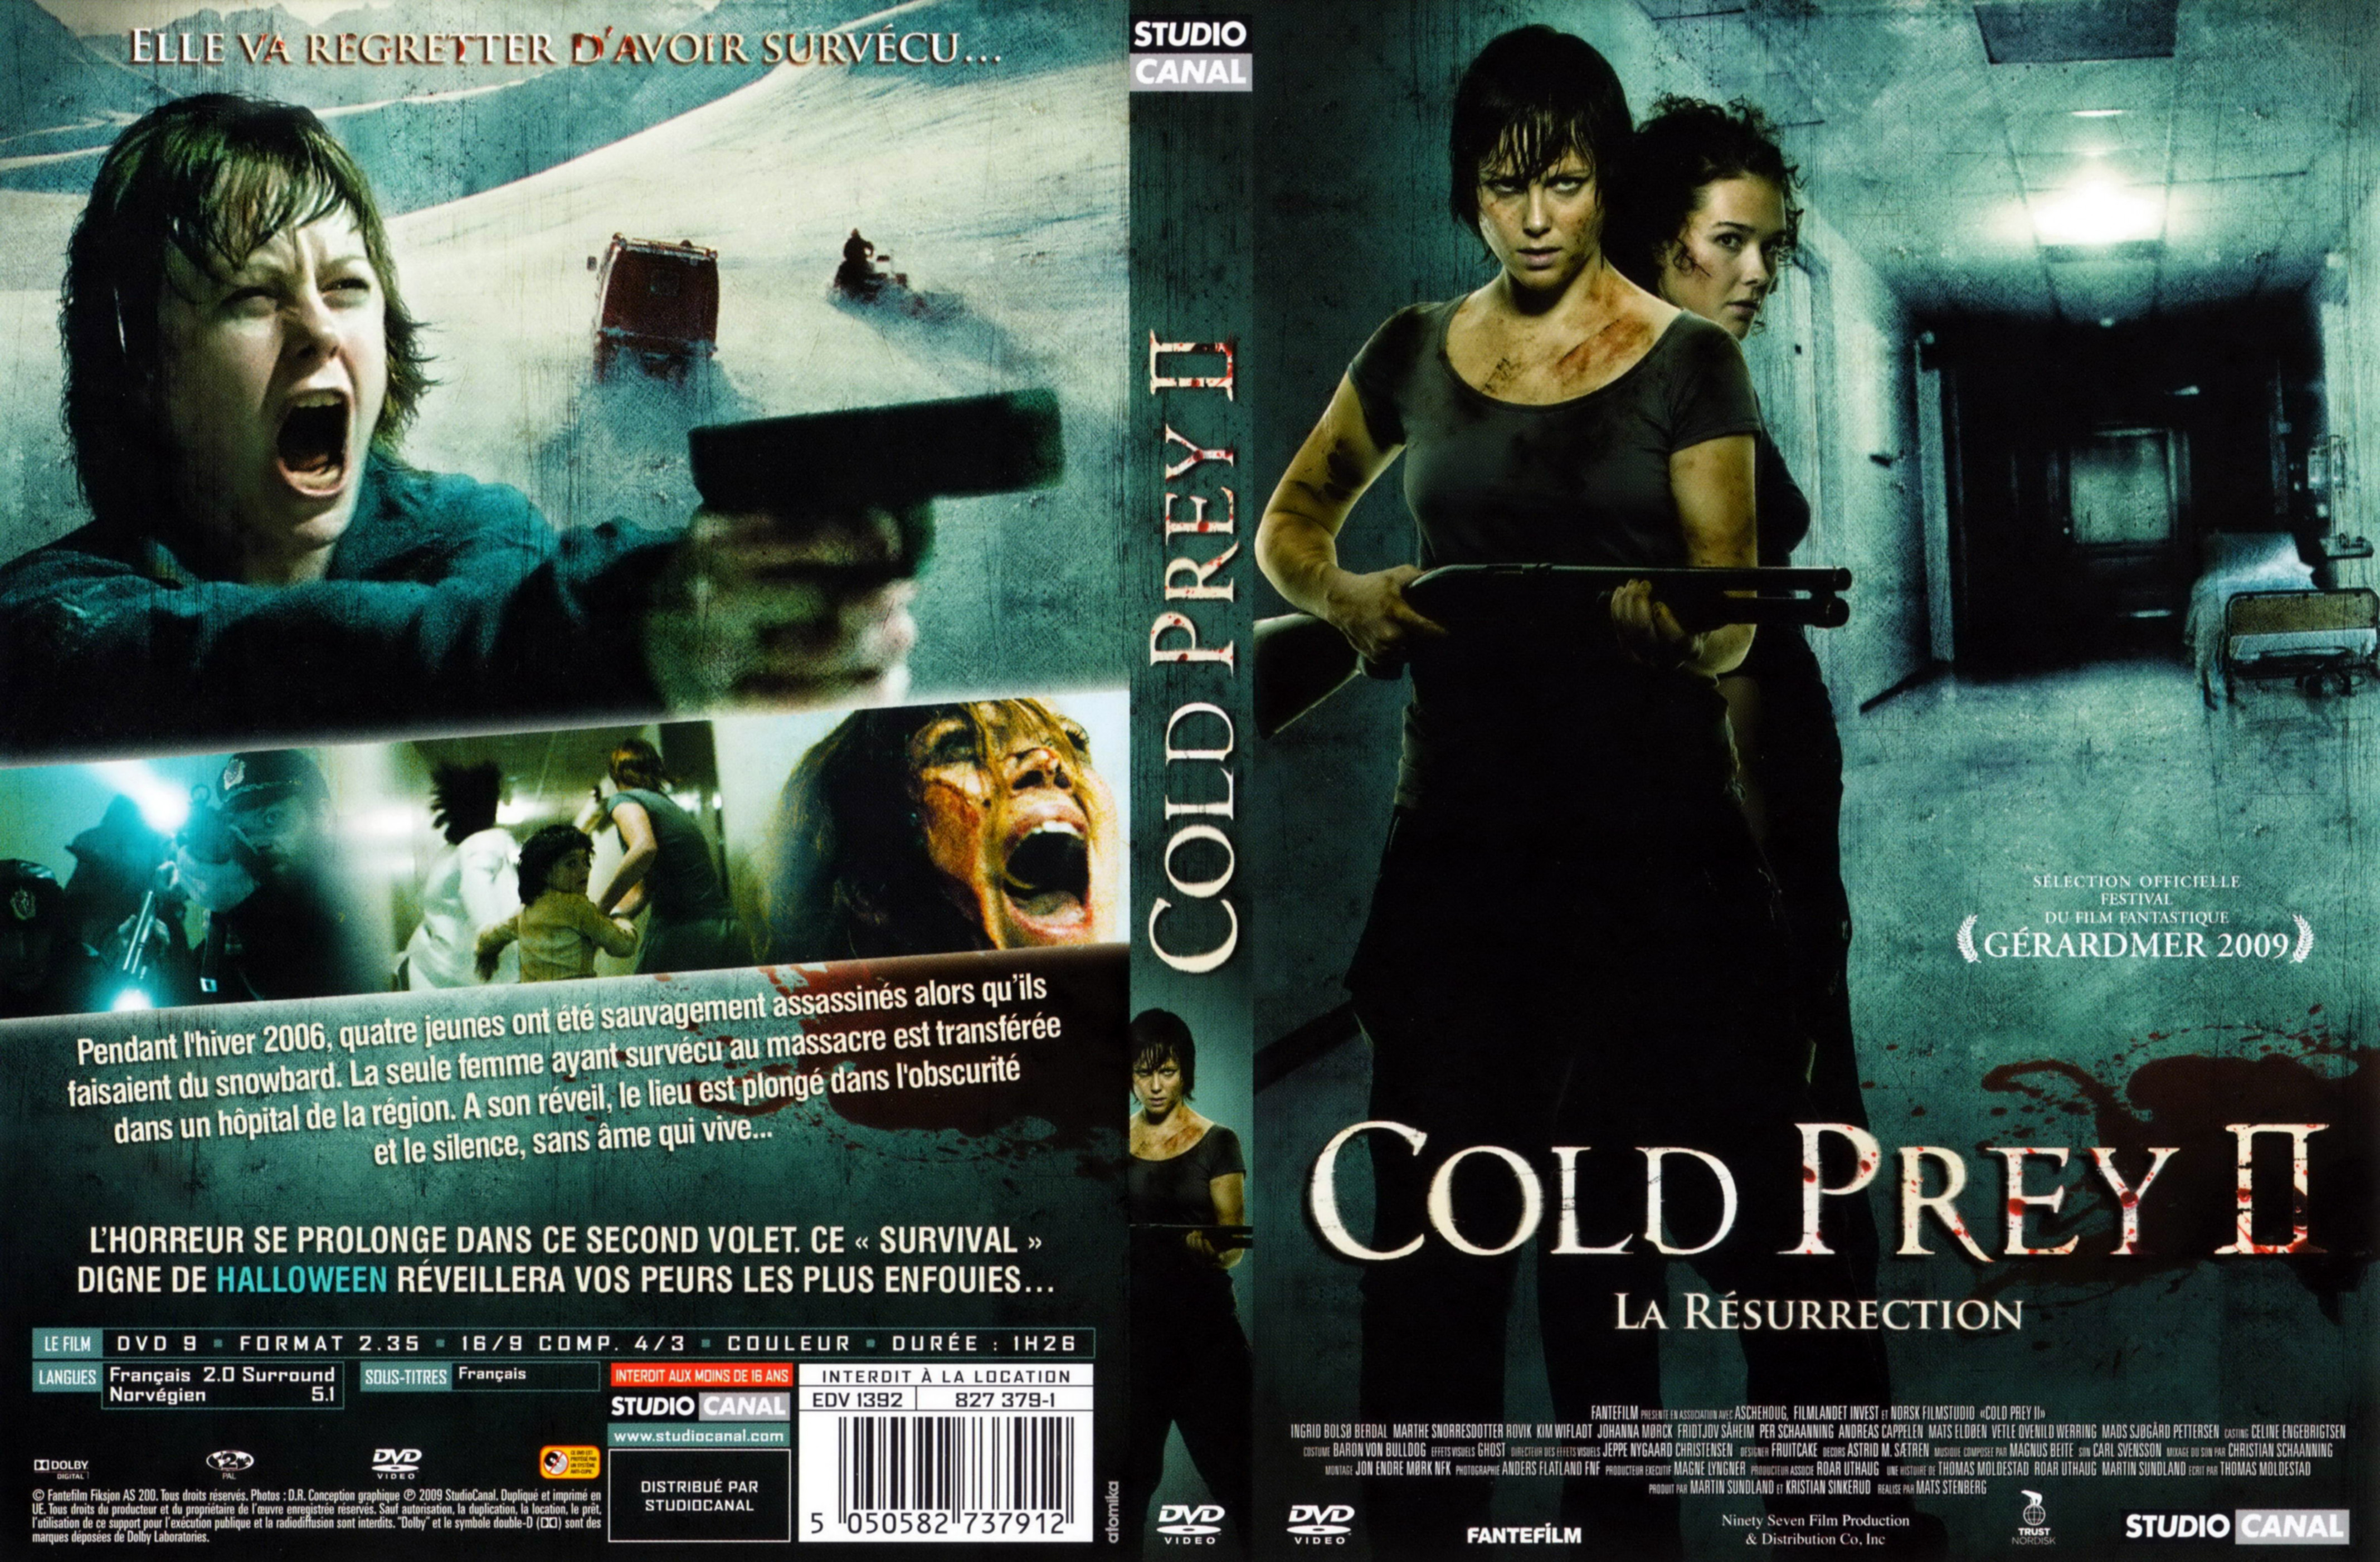 Jaquette DVD Cold prey 2